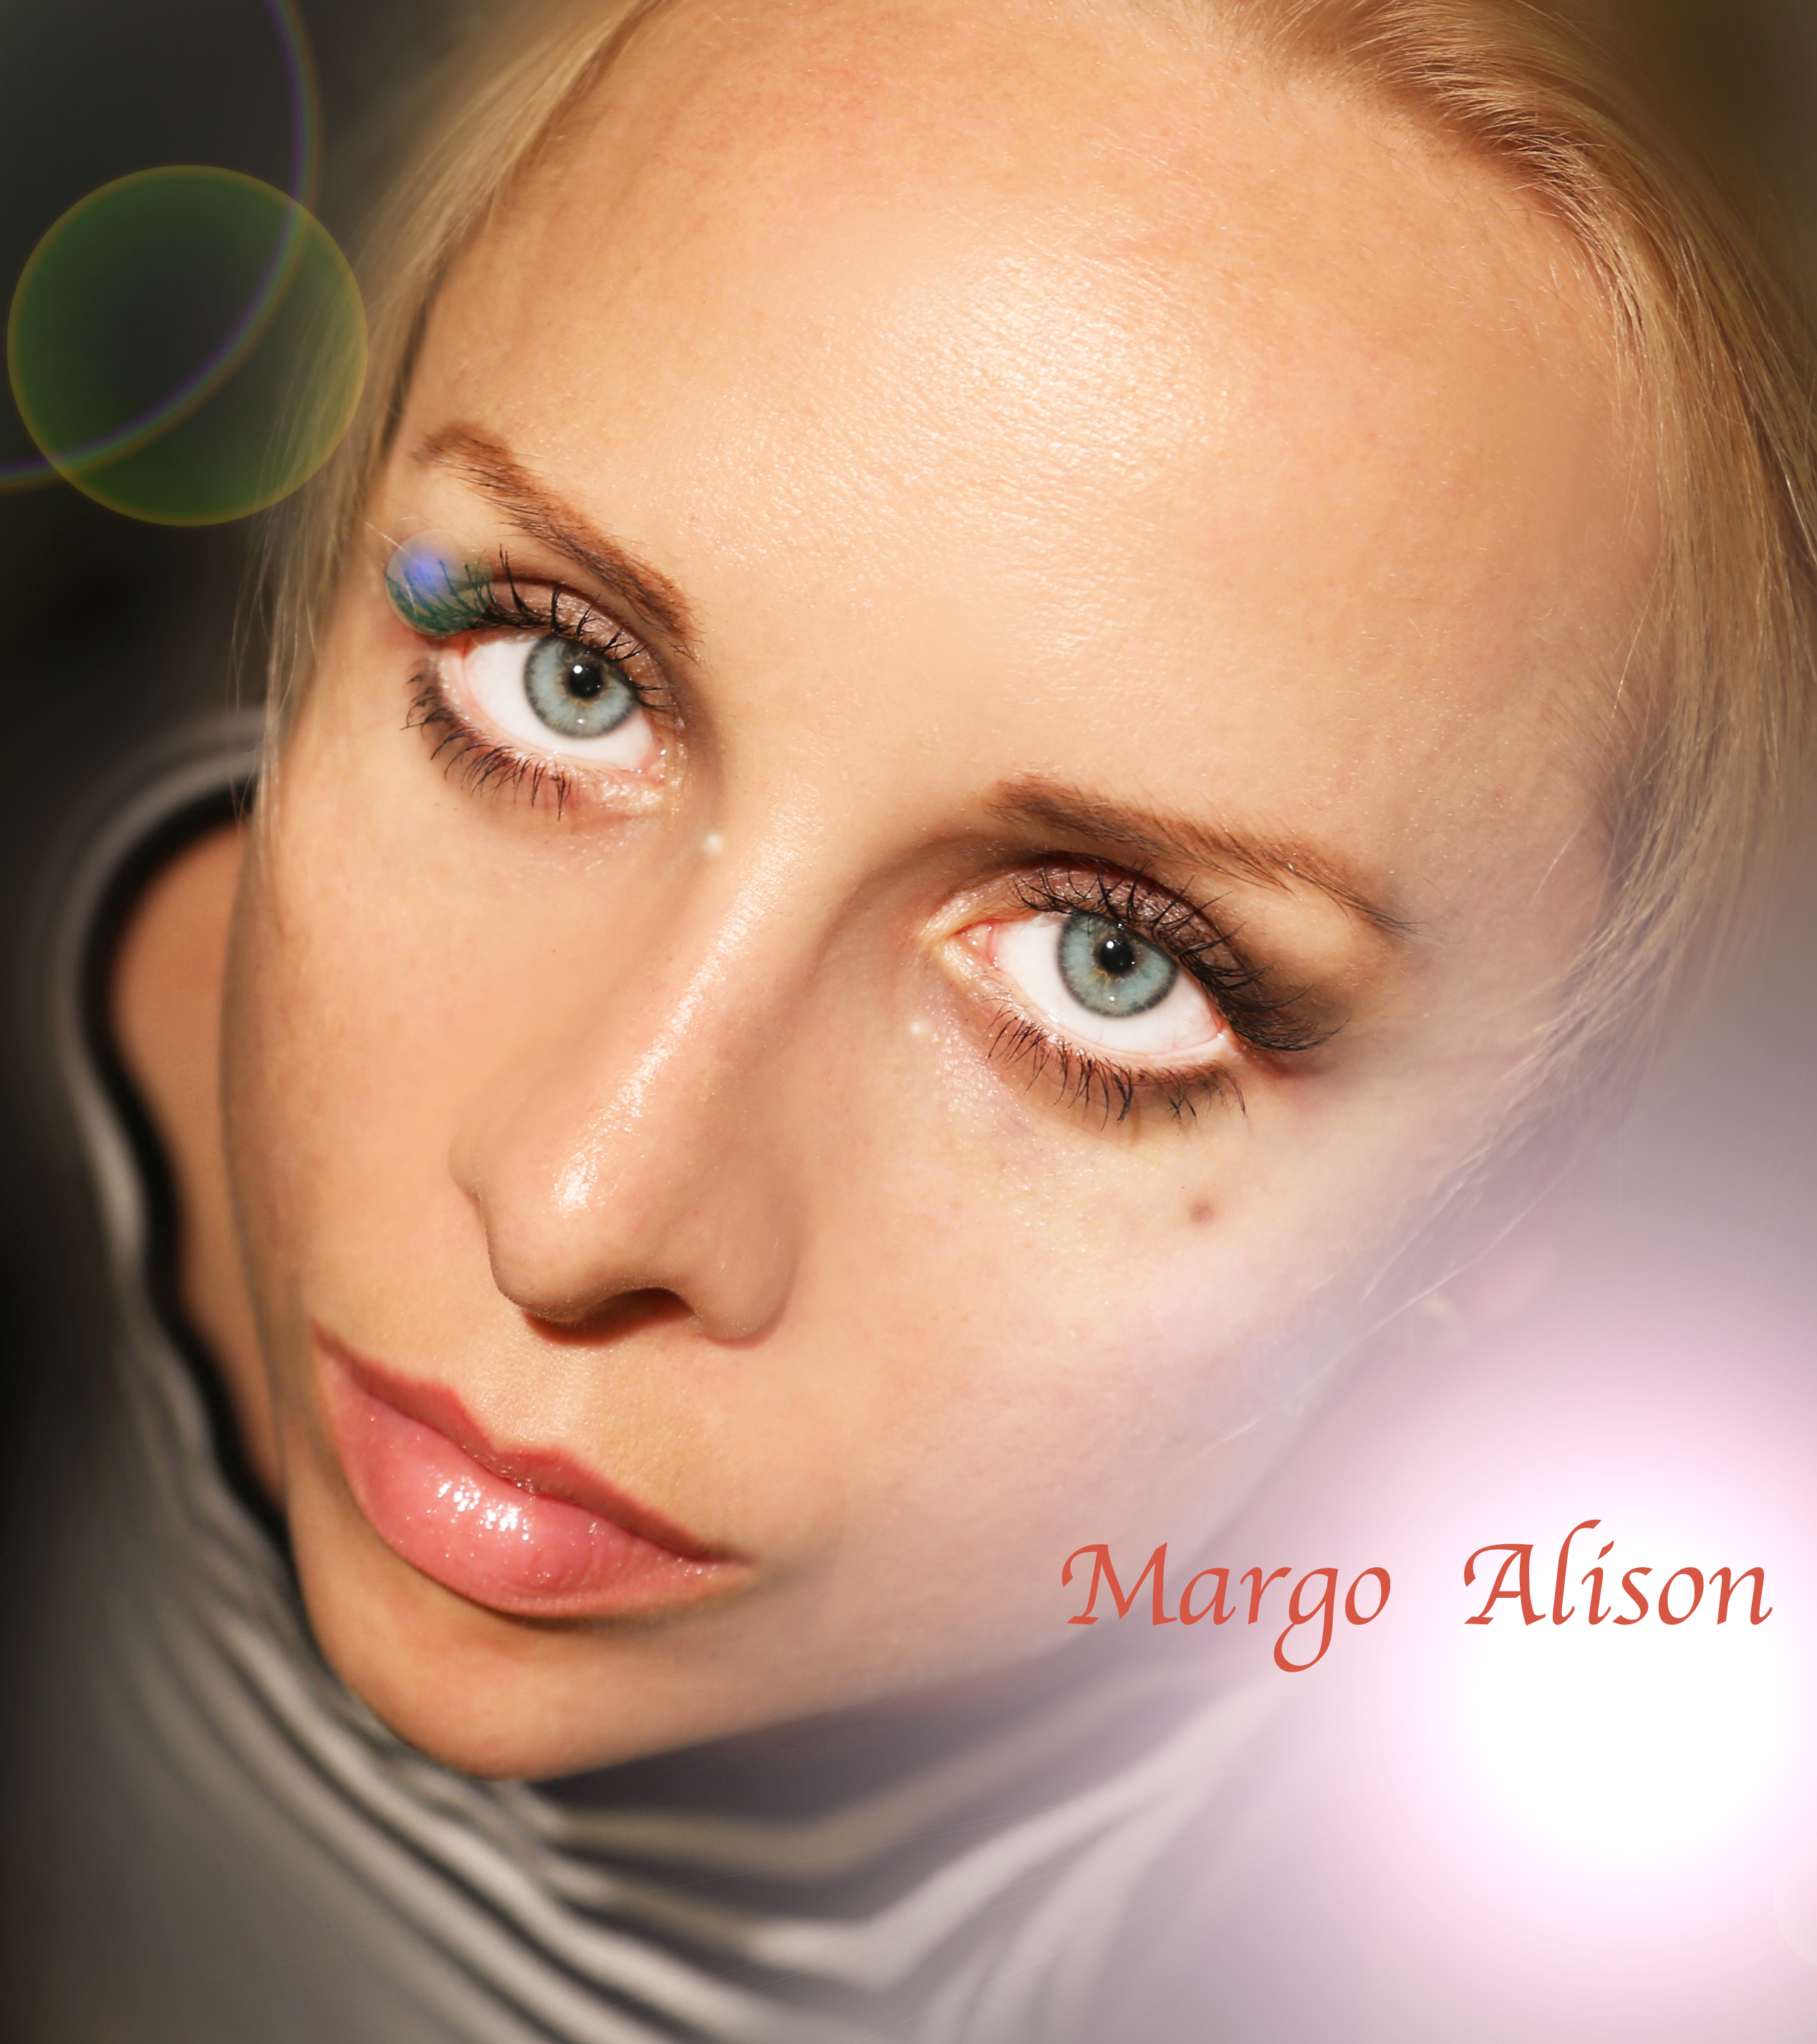 http://www.margoalison.net/#!Margo%20ALison%20space/zoom/c1vo3/image_1pdj